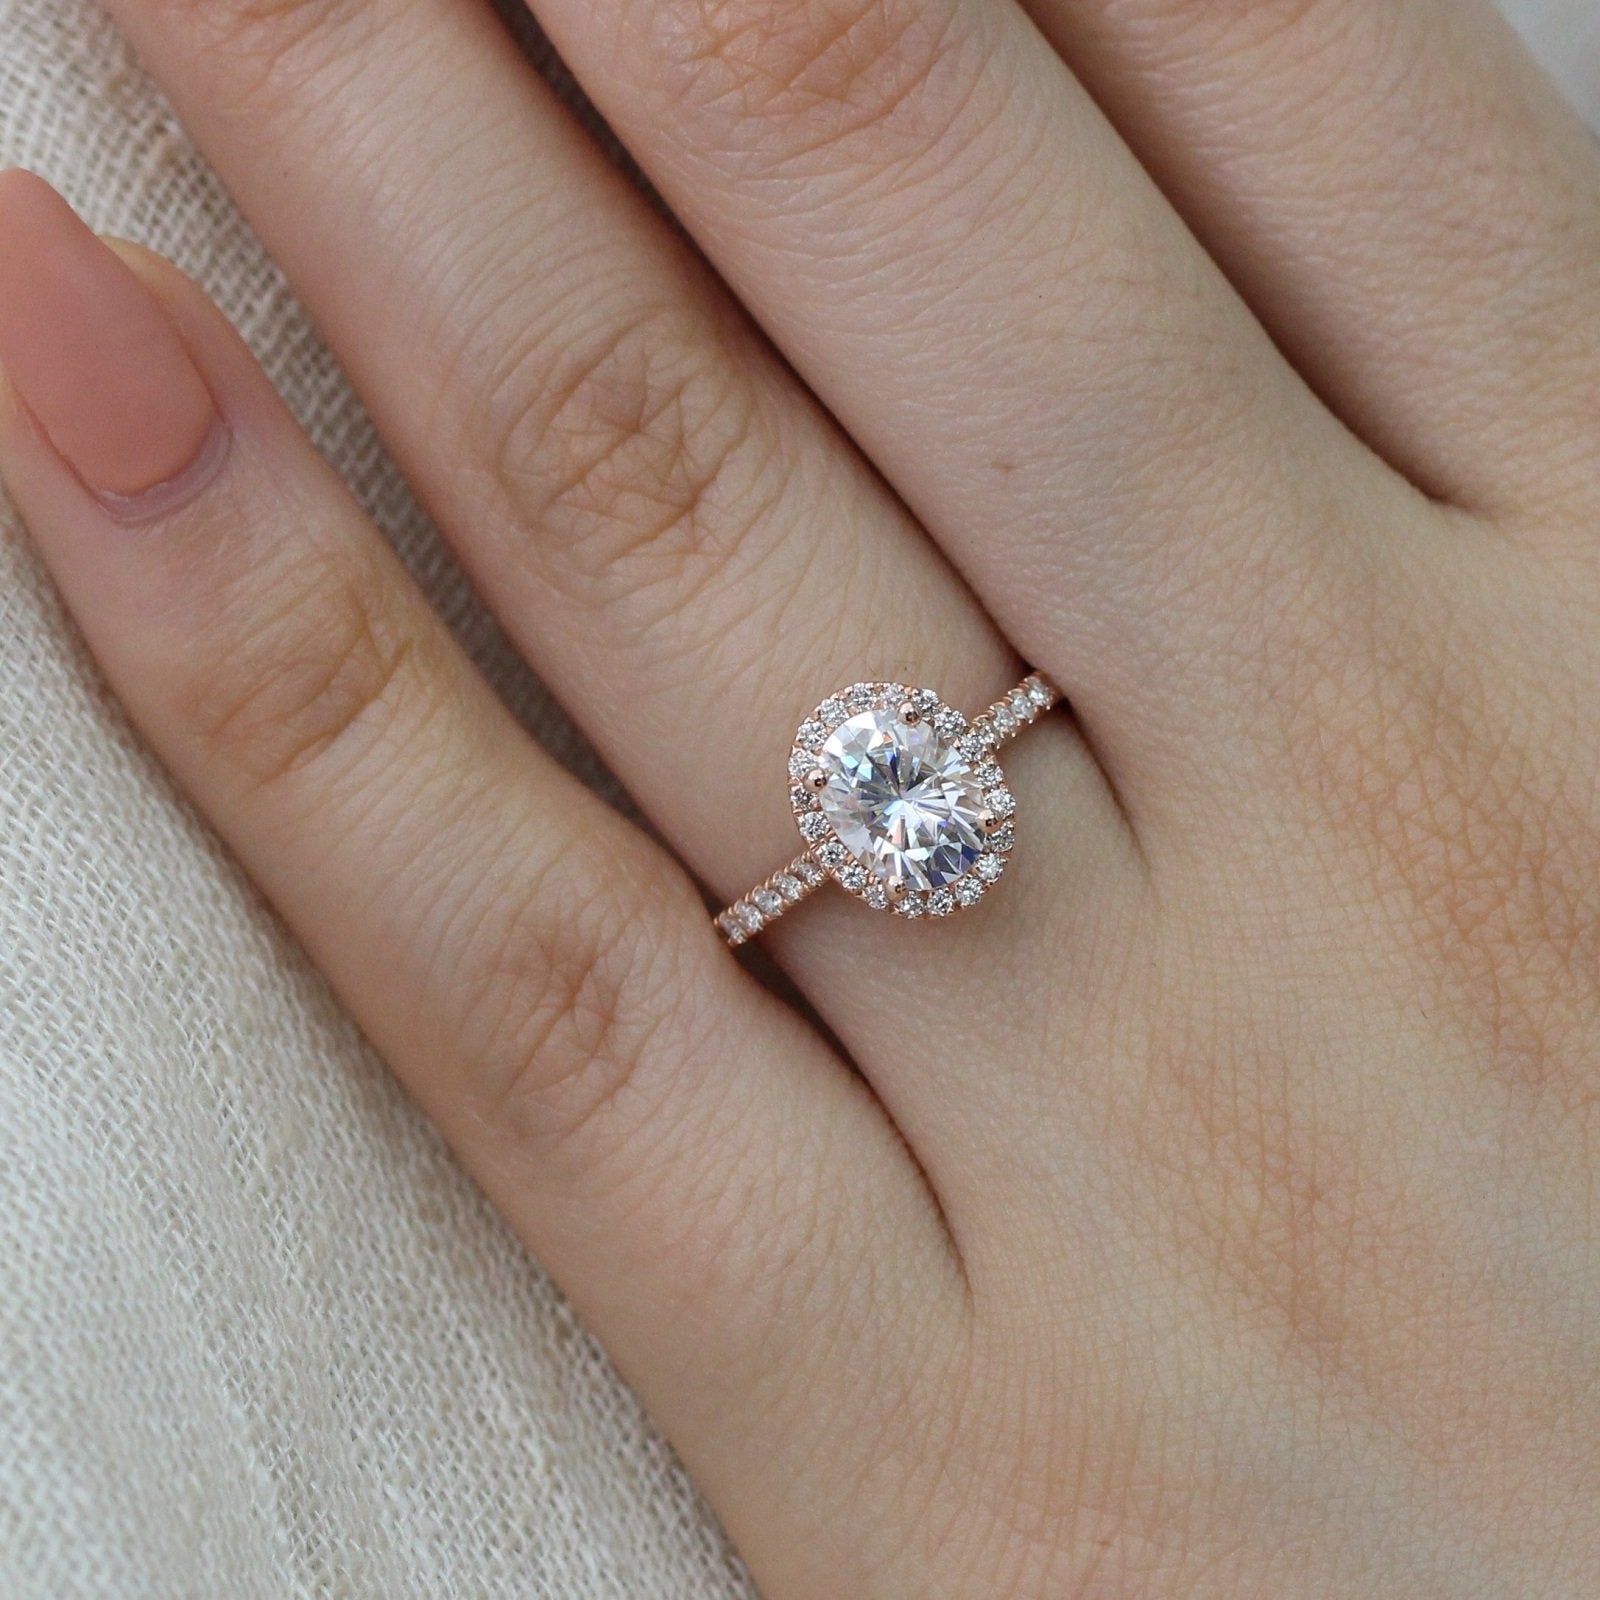 Captivating Oval Cut Diamond Ring